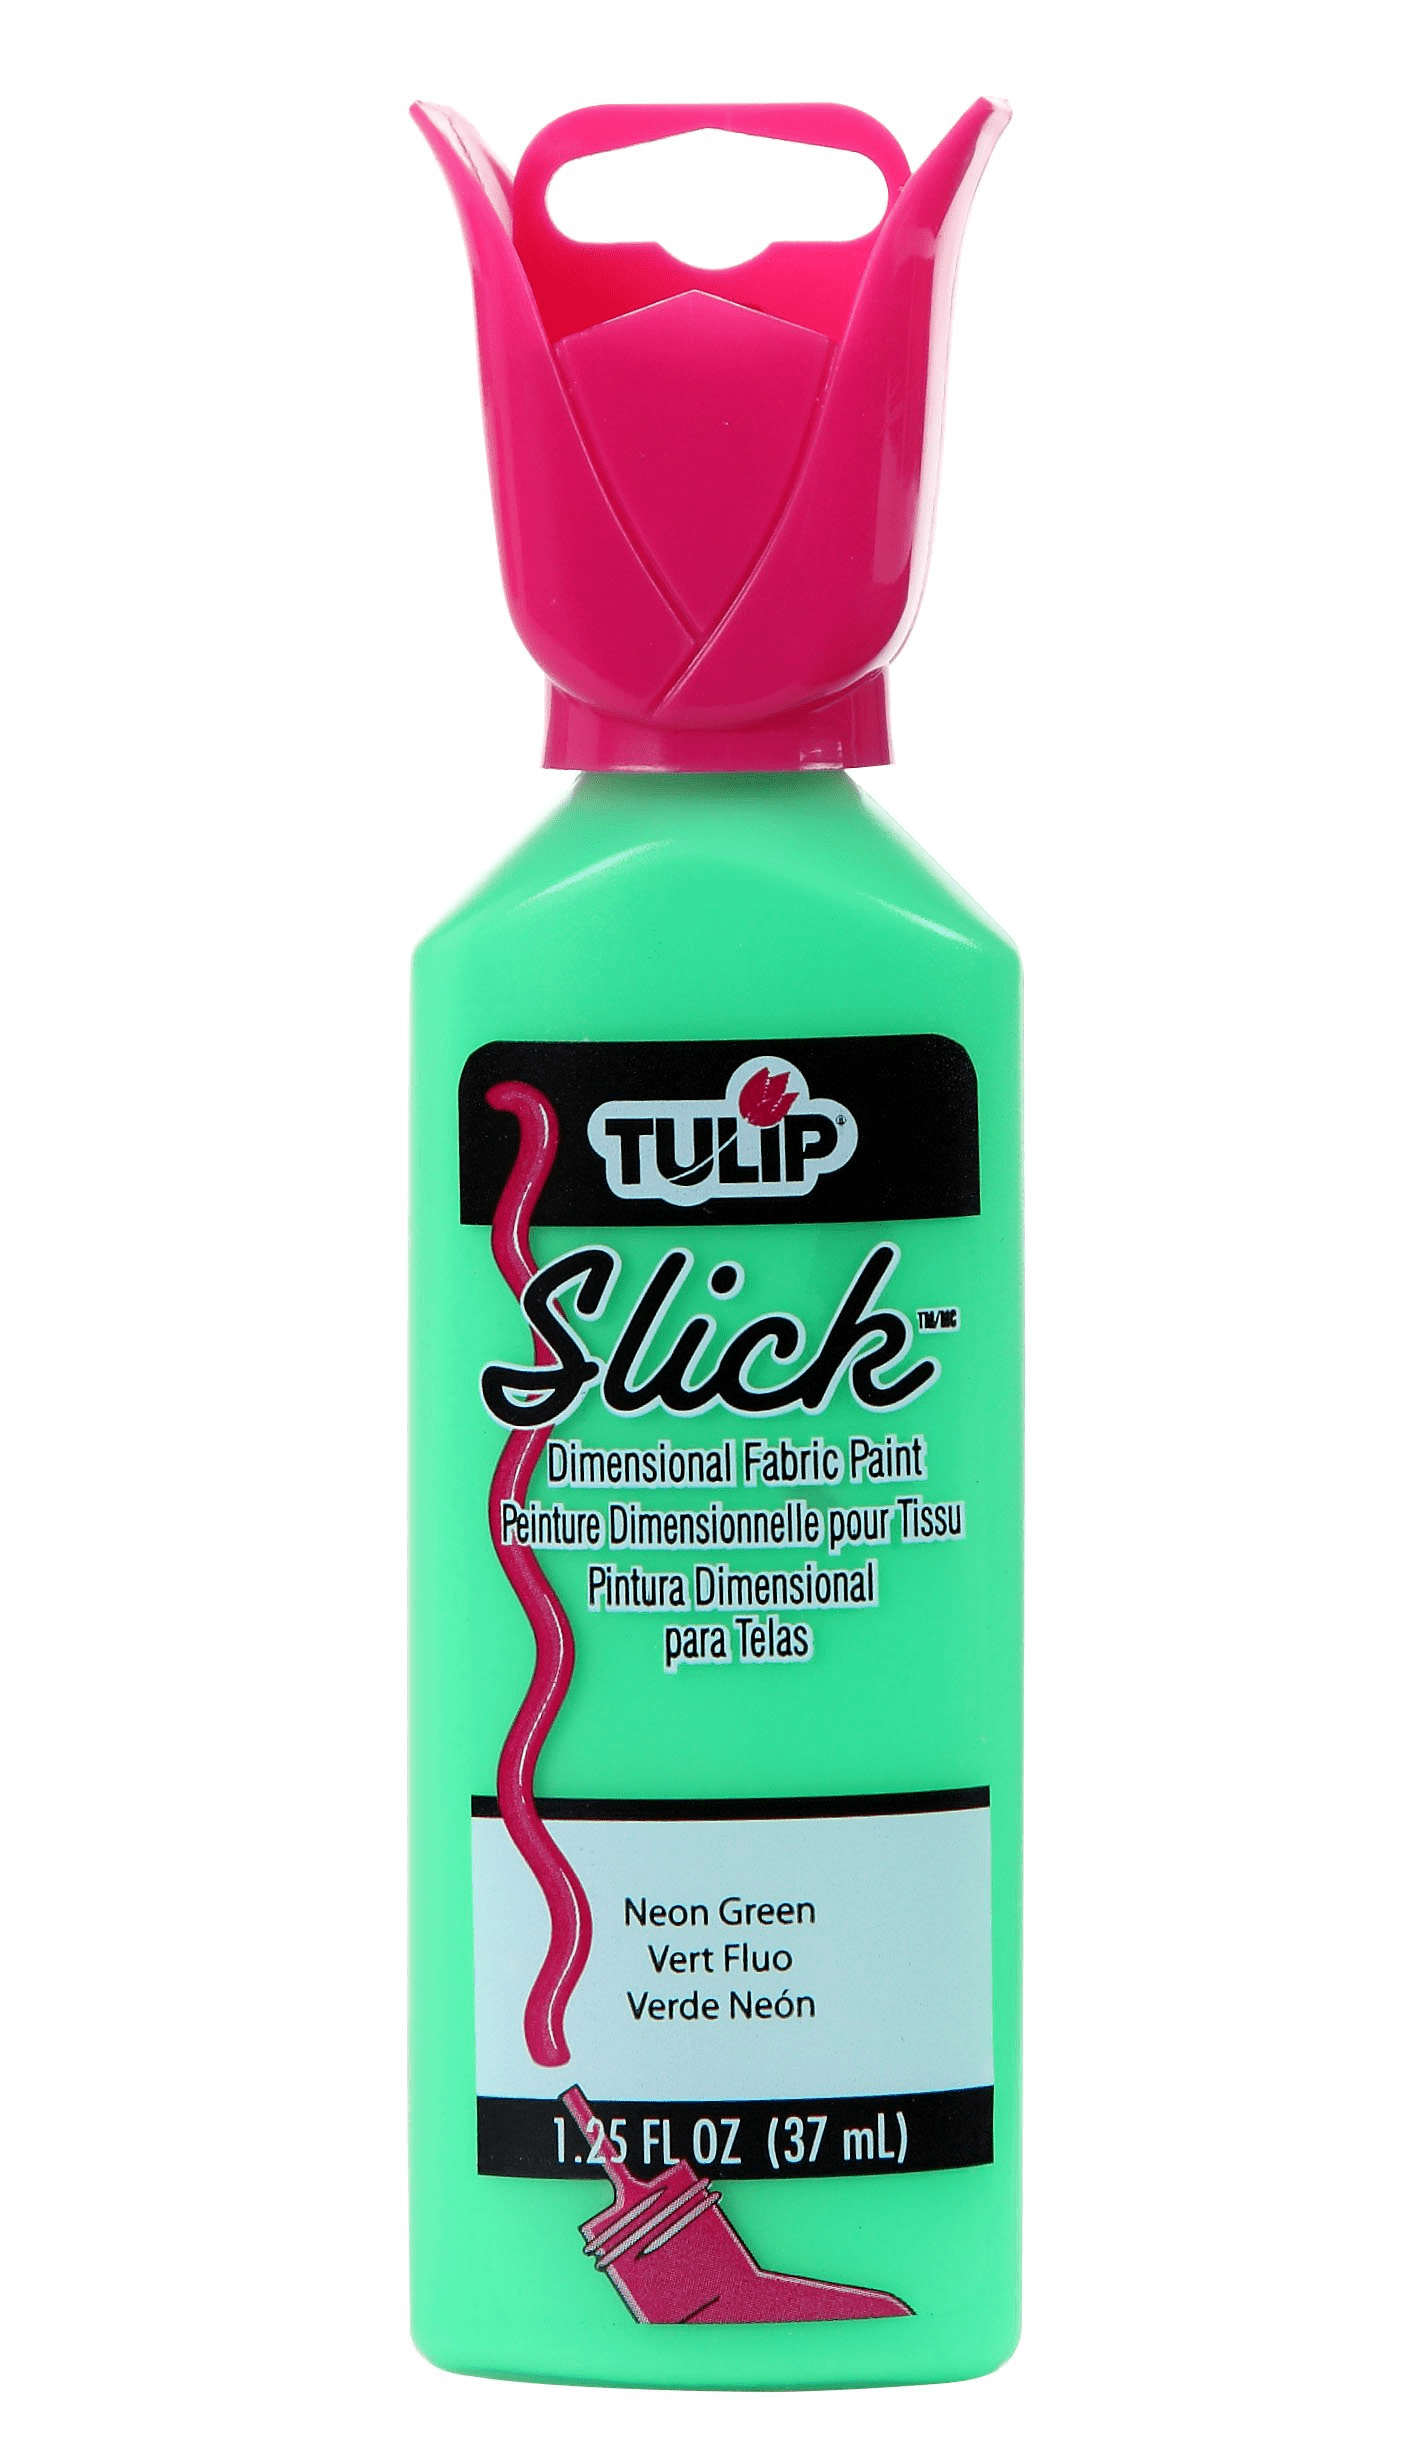 Tulip Slick Dimensional Fabric Paint (Fluorescent Green, 1.25 oz)